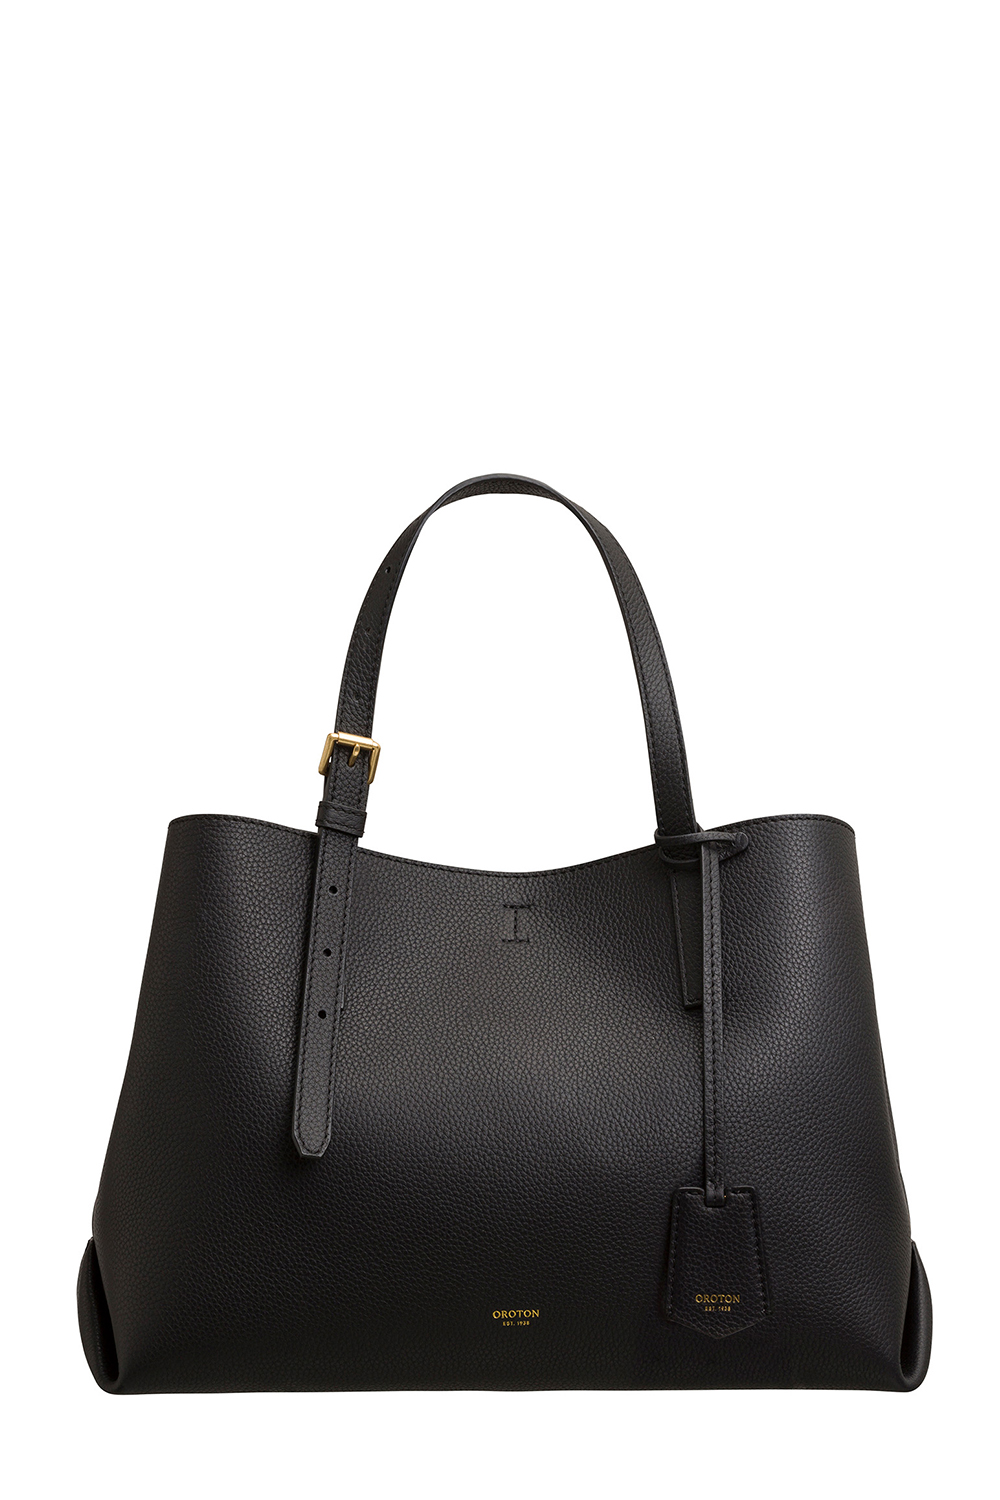 Oroton Anna Mini Shopper Tote/Shoulder/Handbag RRP $349 : Amazon.com.au:  Clothing, Shoes & Accessories